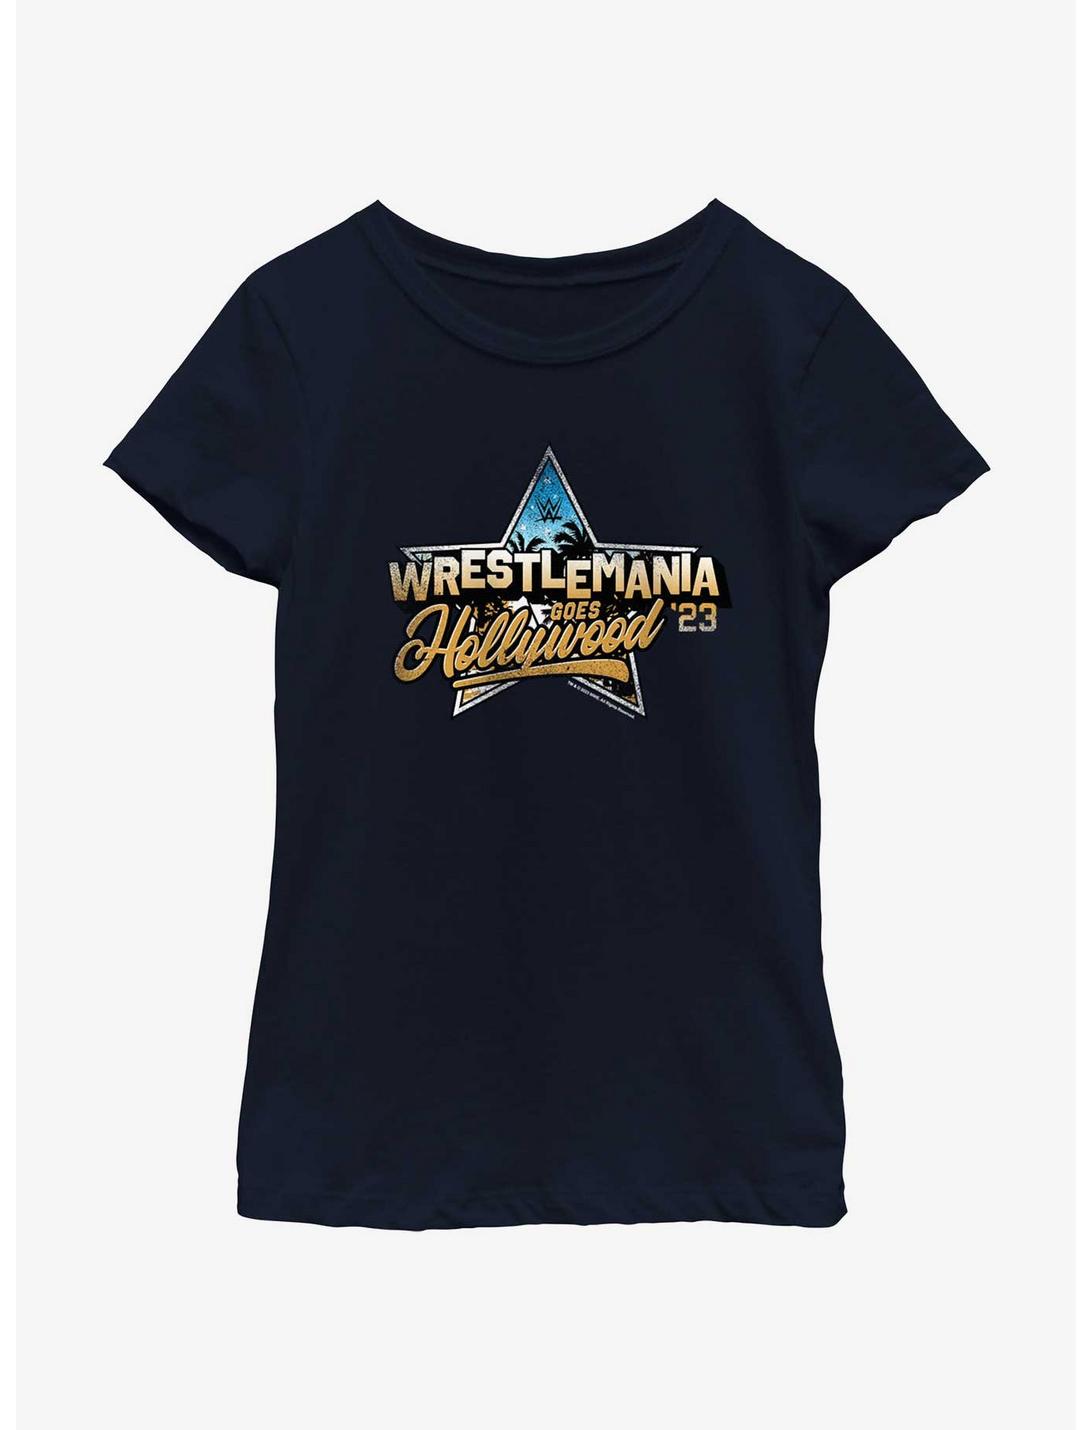 WWE WrestleMania Goes Hollywood 23 Youth Girls T-Shirt, NAVY, hi-res